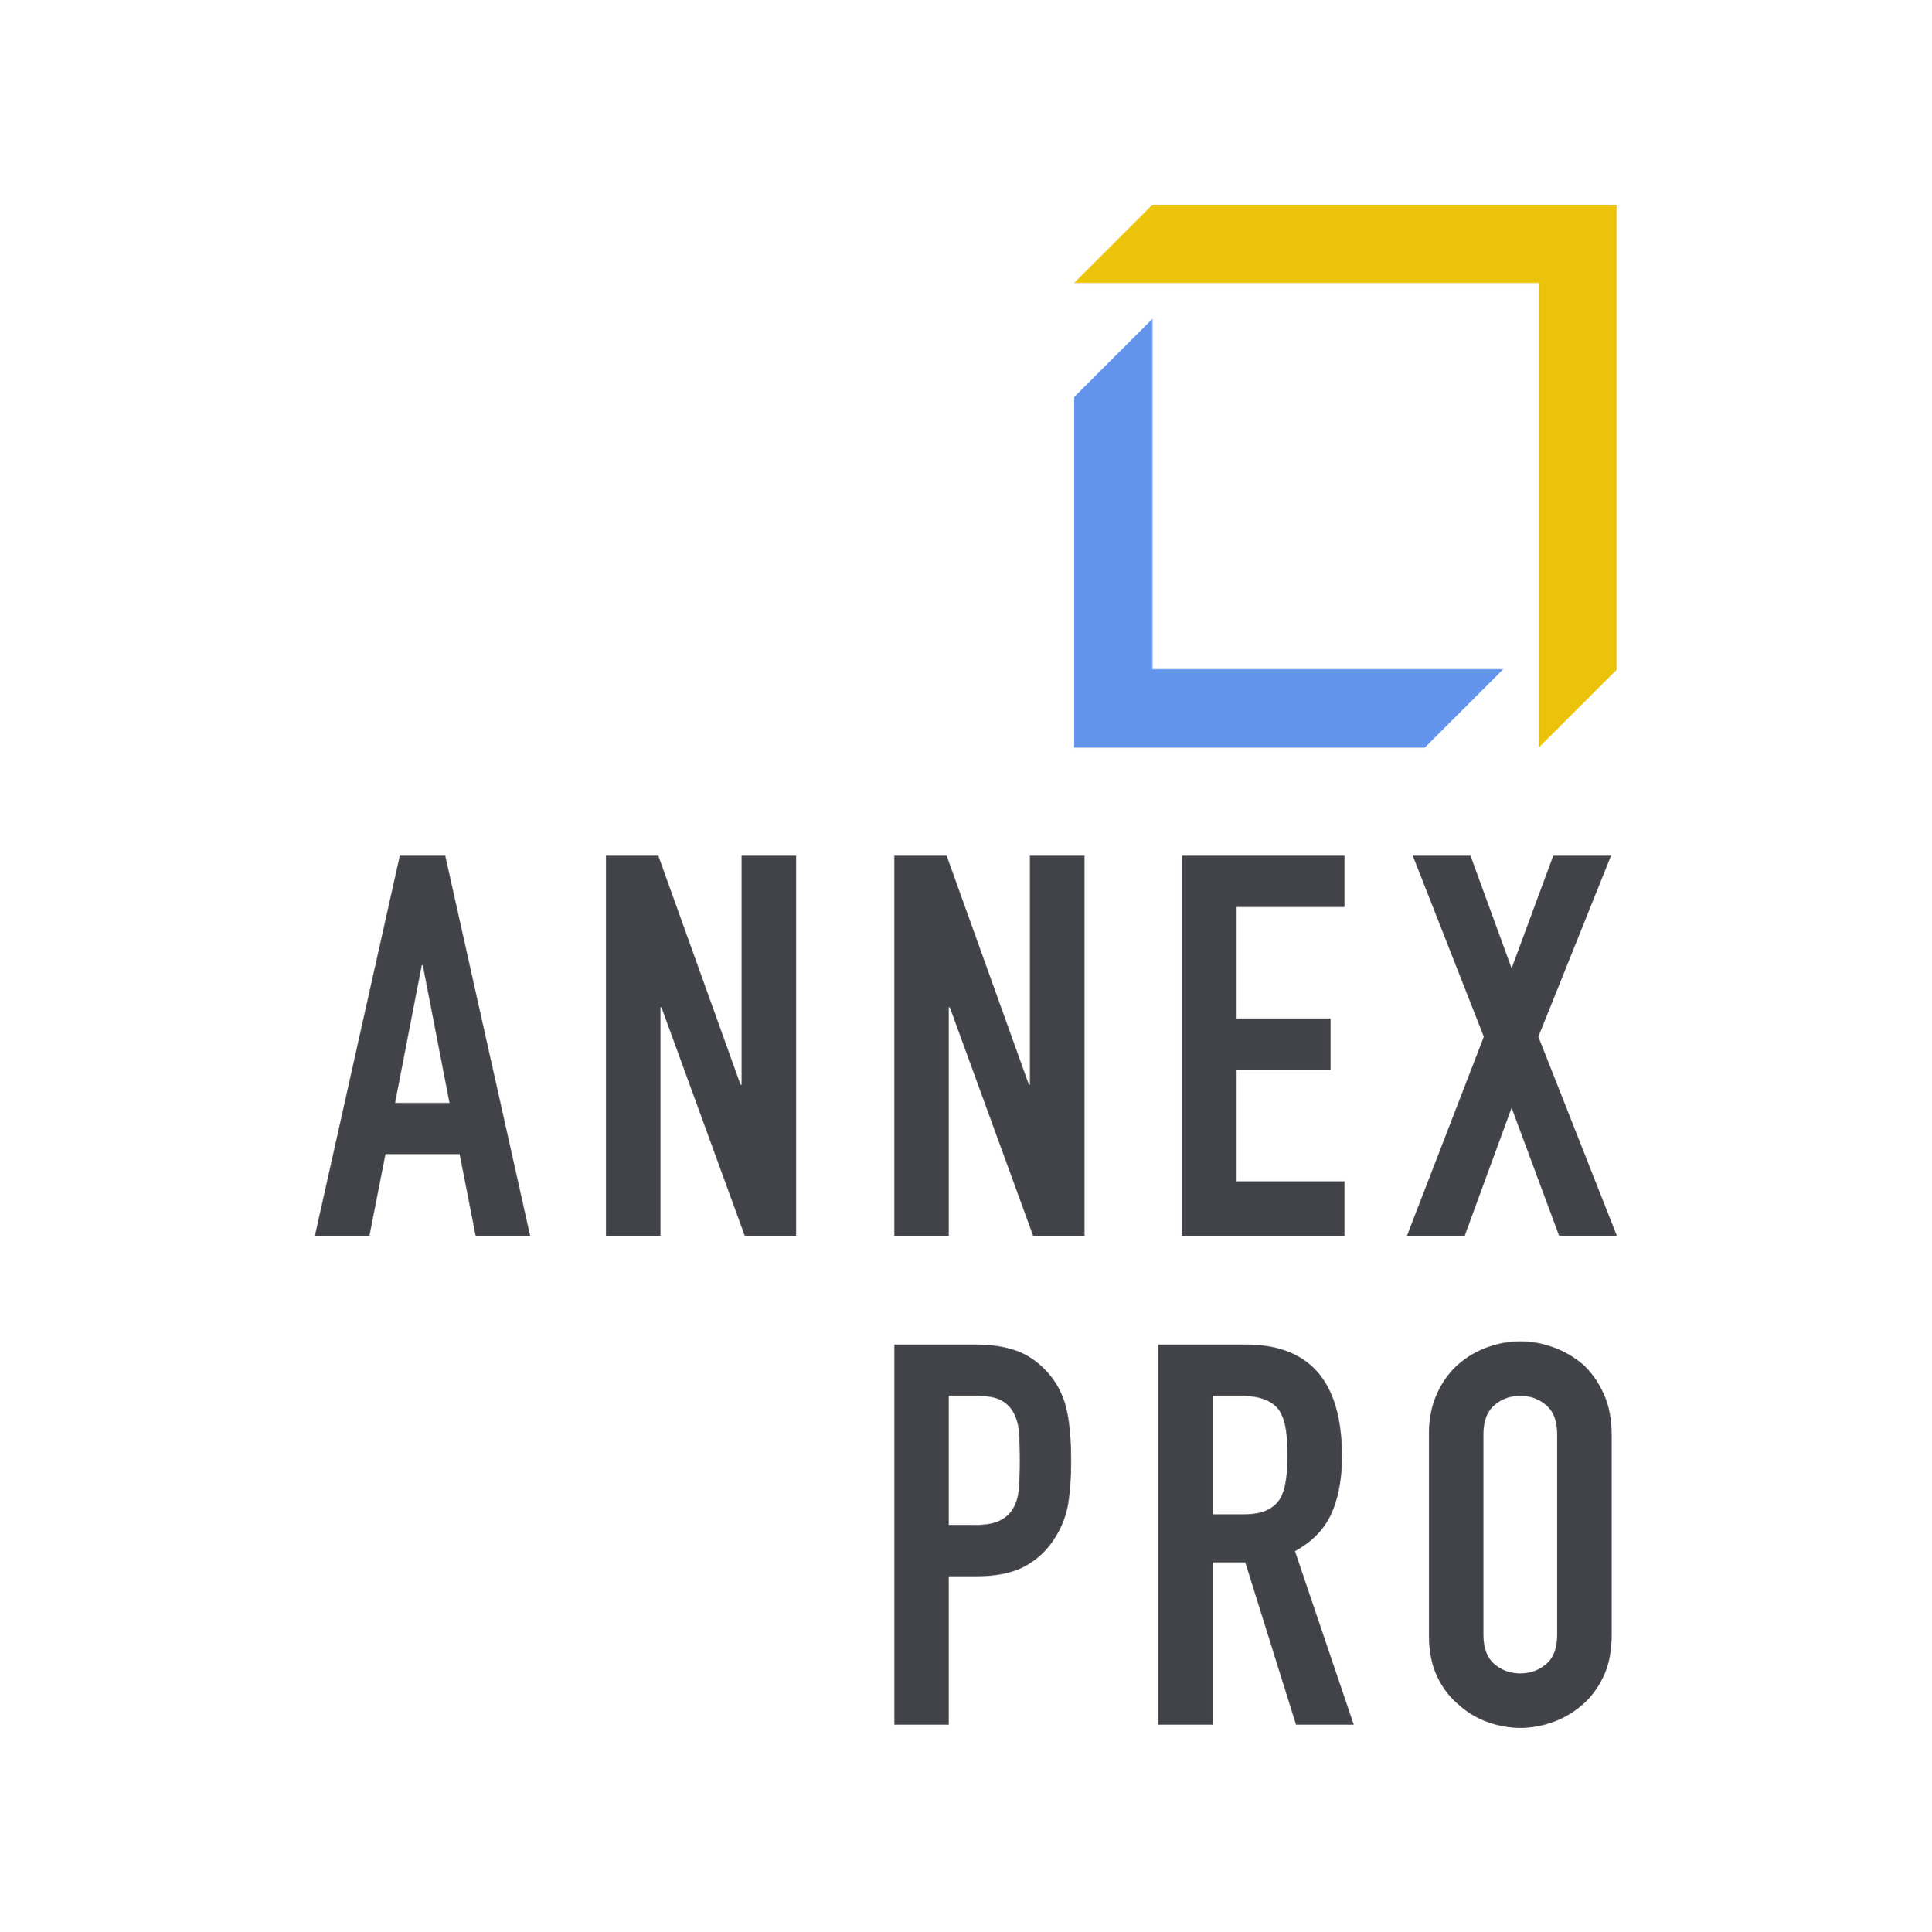 annex-pro-logo - no background --RGB-3000x3000 (1).png